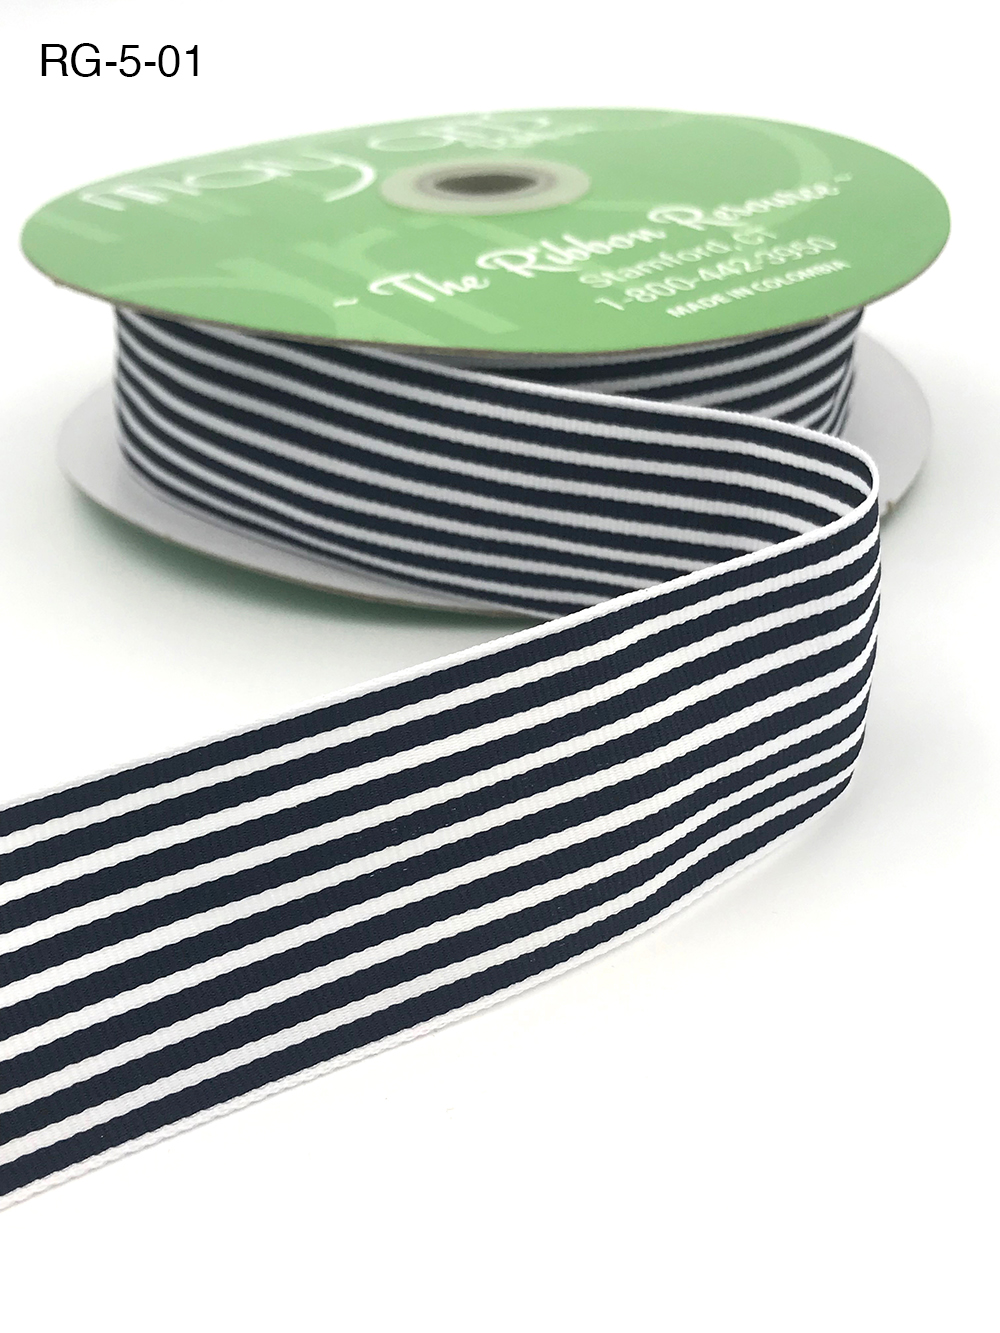 Luxe Grosgrain Ribbon - 2.5 Wide Online Ribbon - May Arts Ribbon